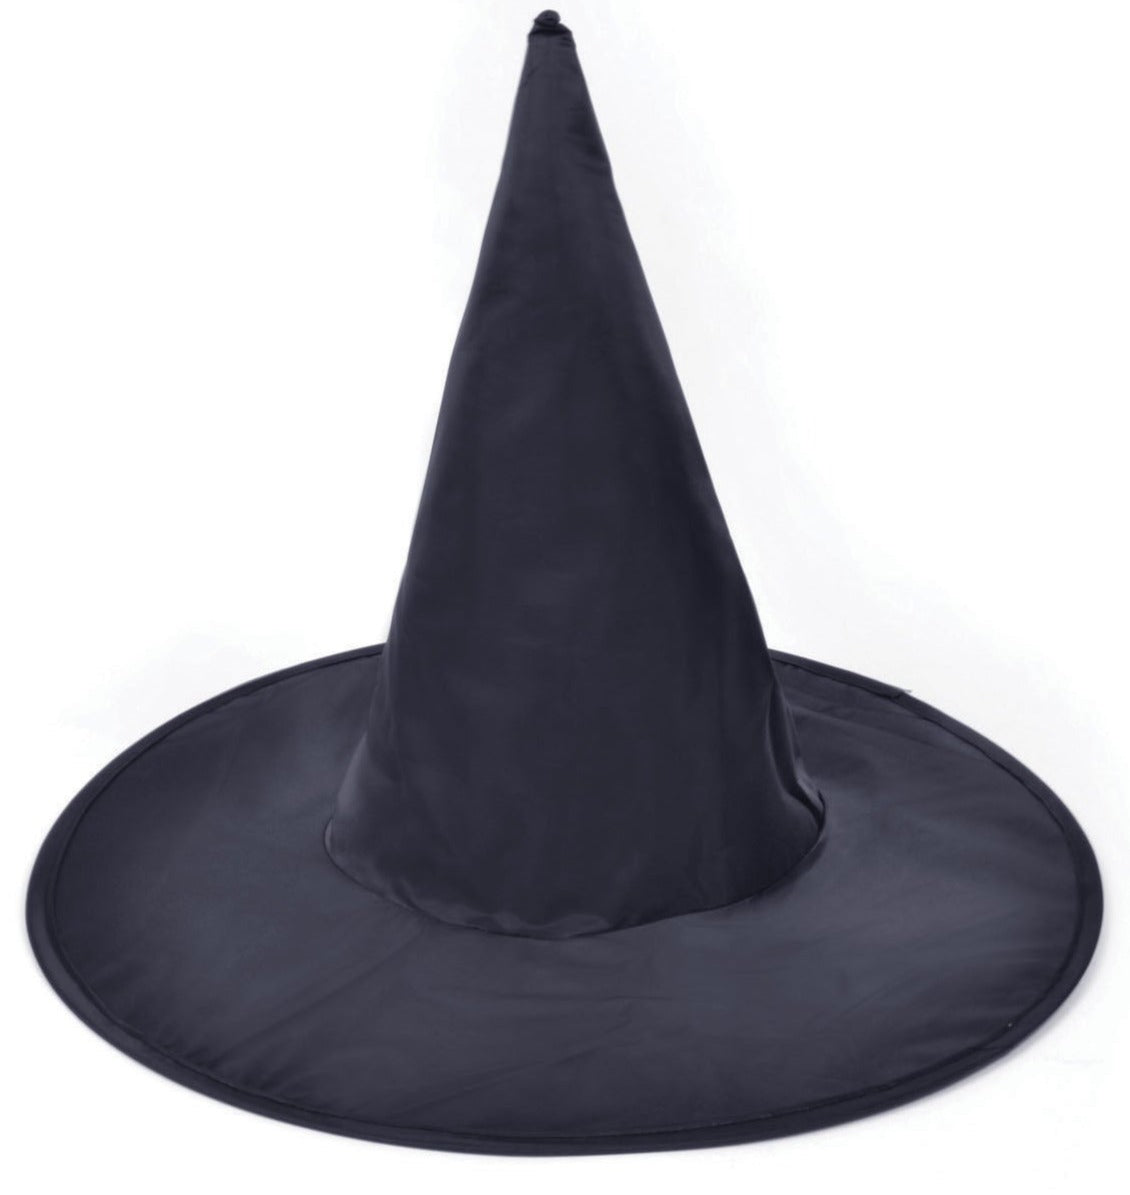 Witch Hat - Black